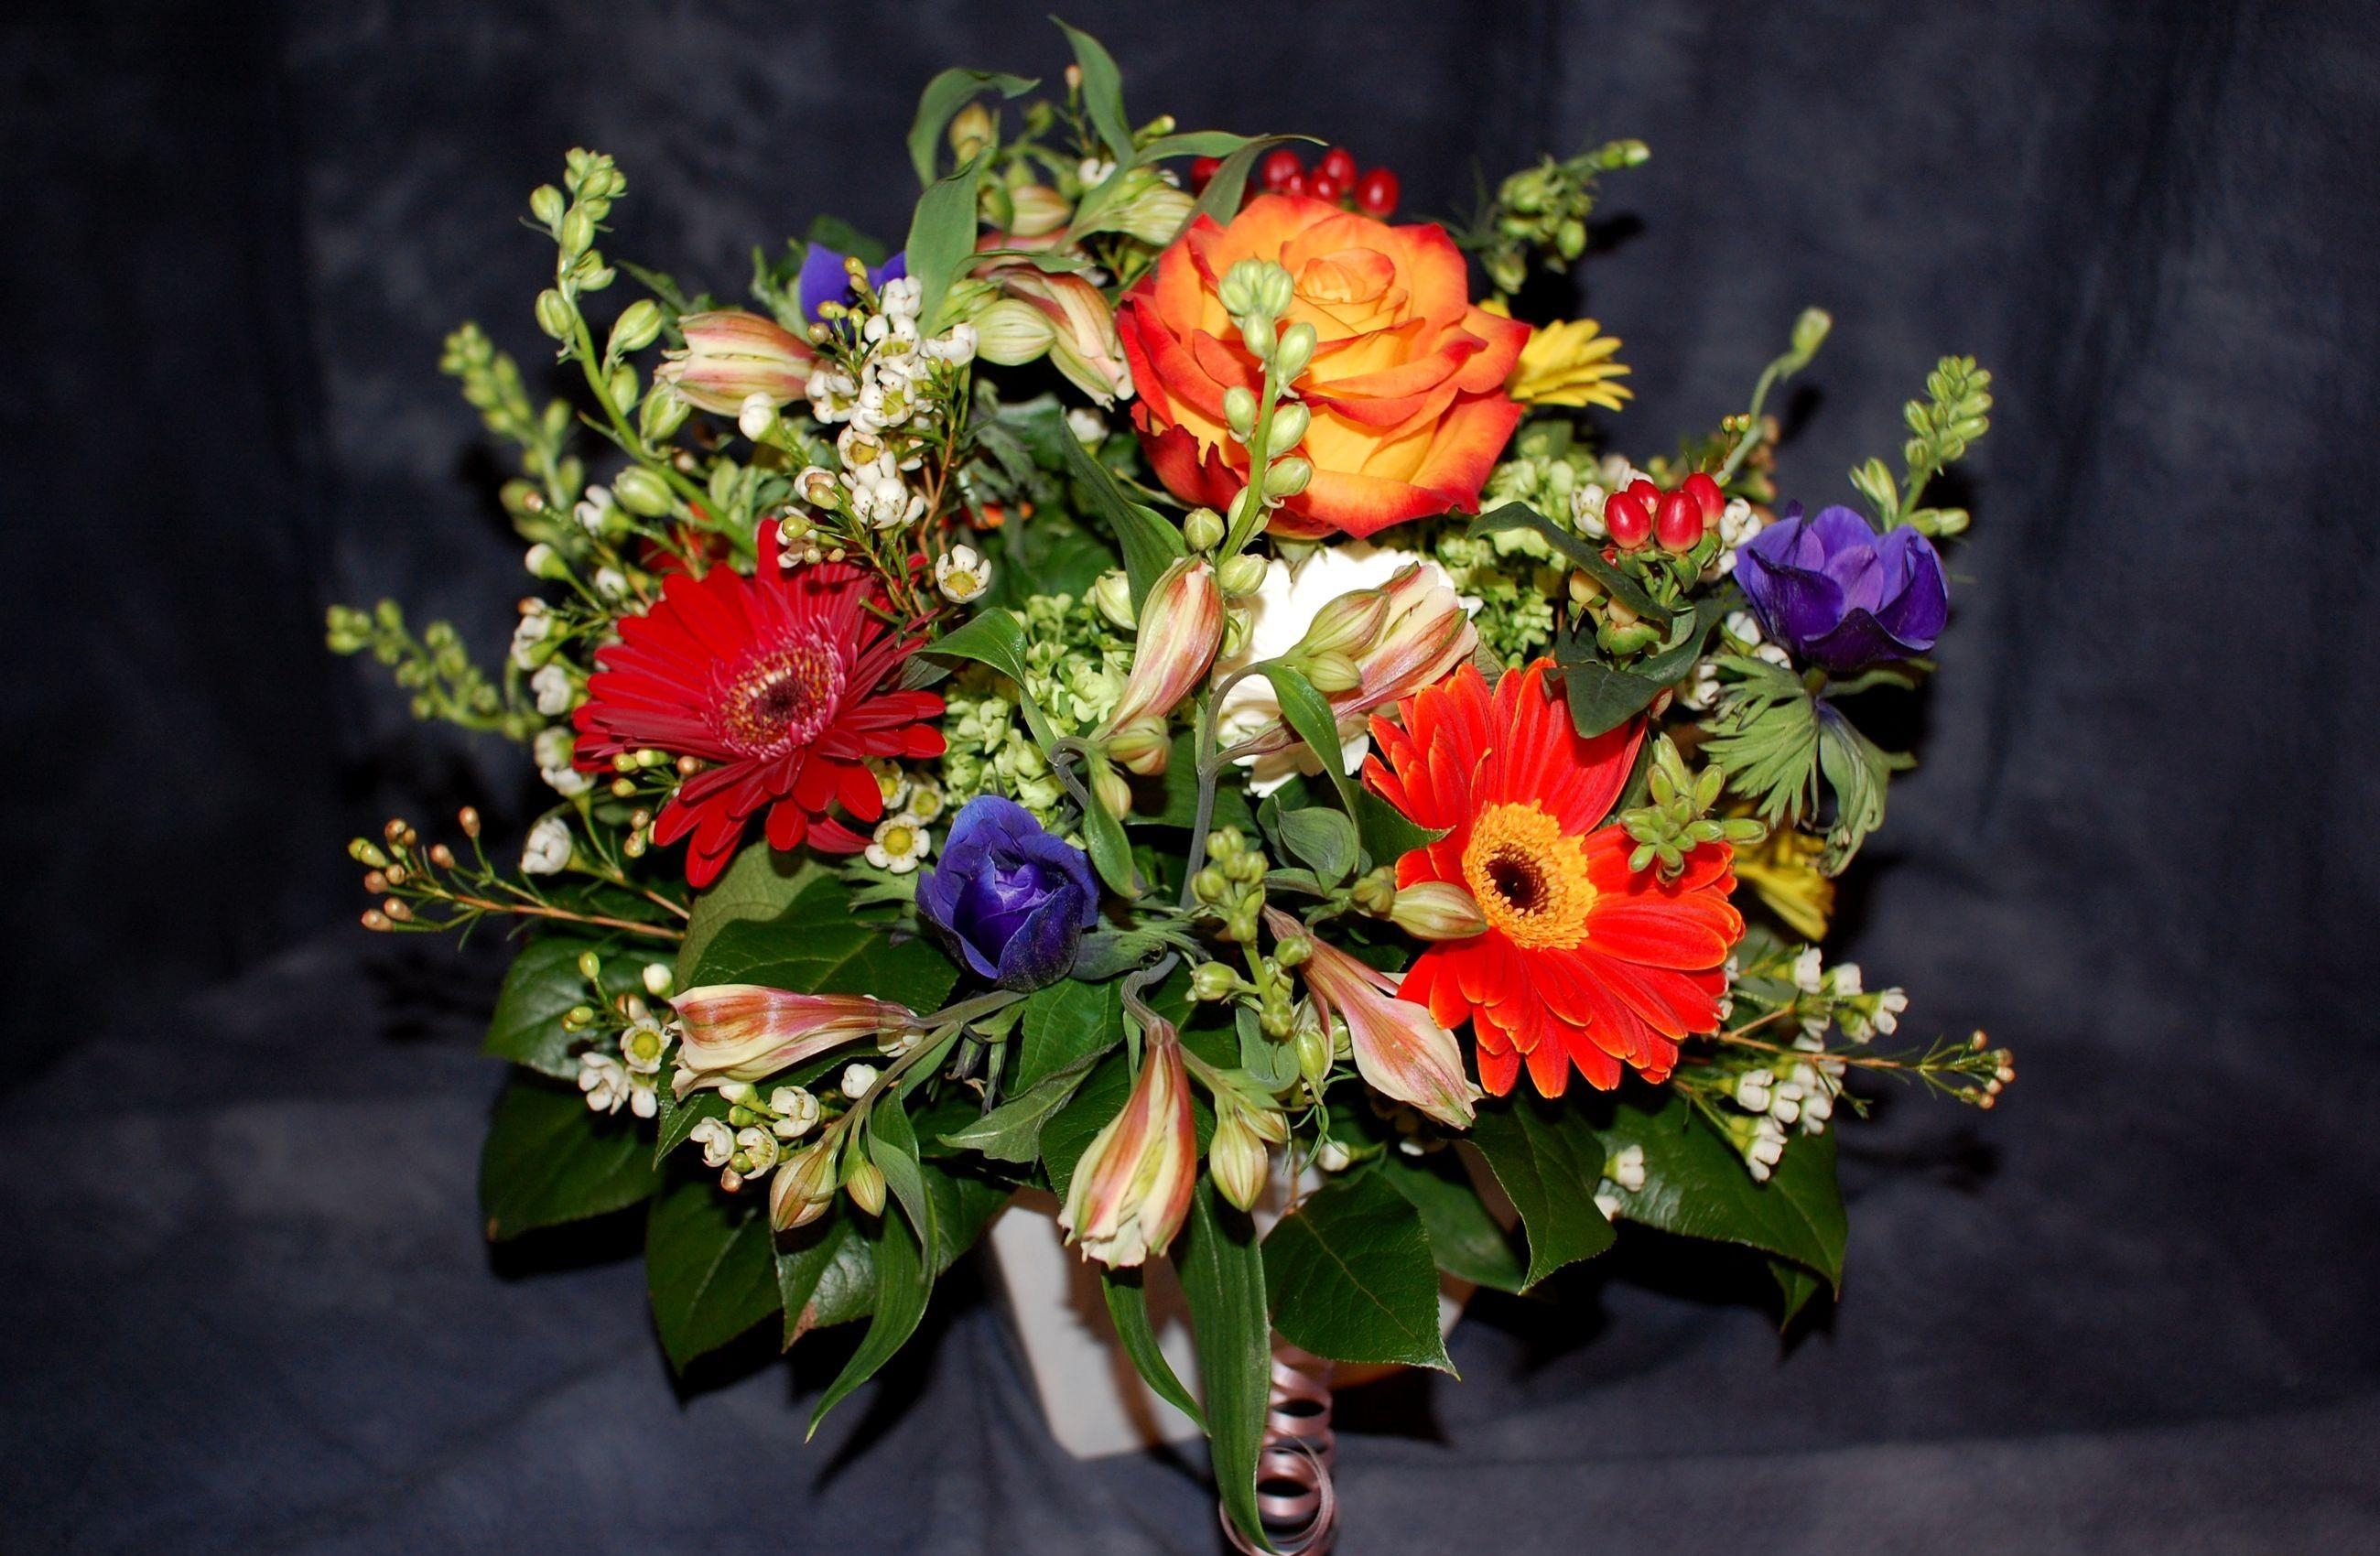 flowers, roses, gerberas, registration, typography, alstroemeria, bouquet, composition